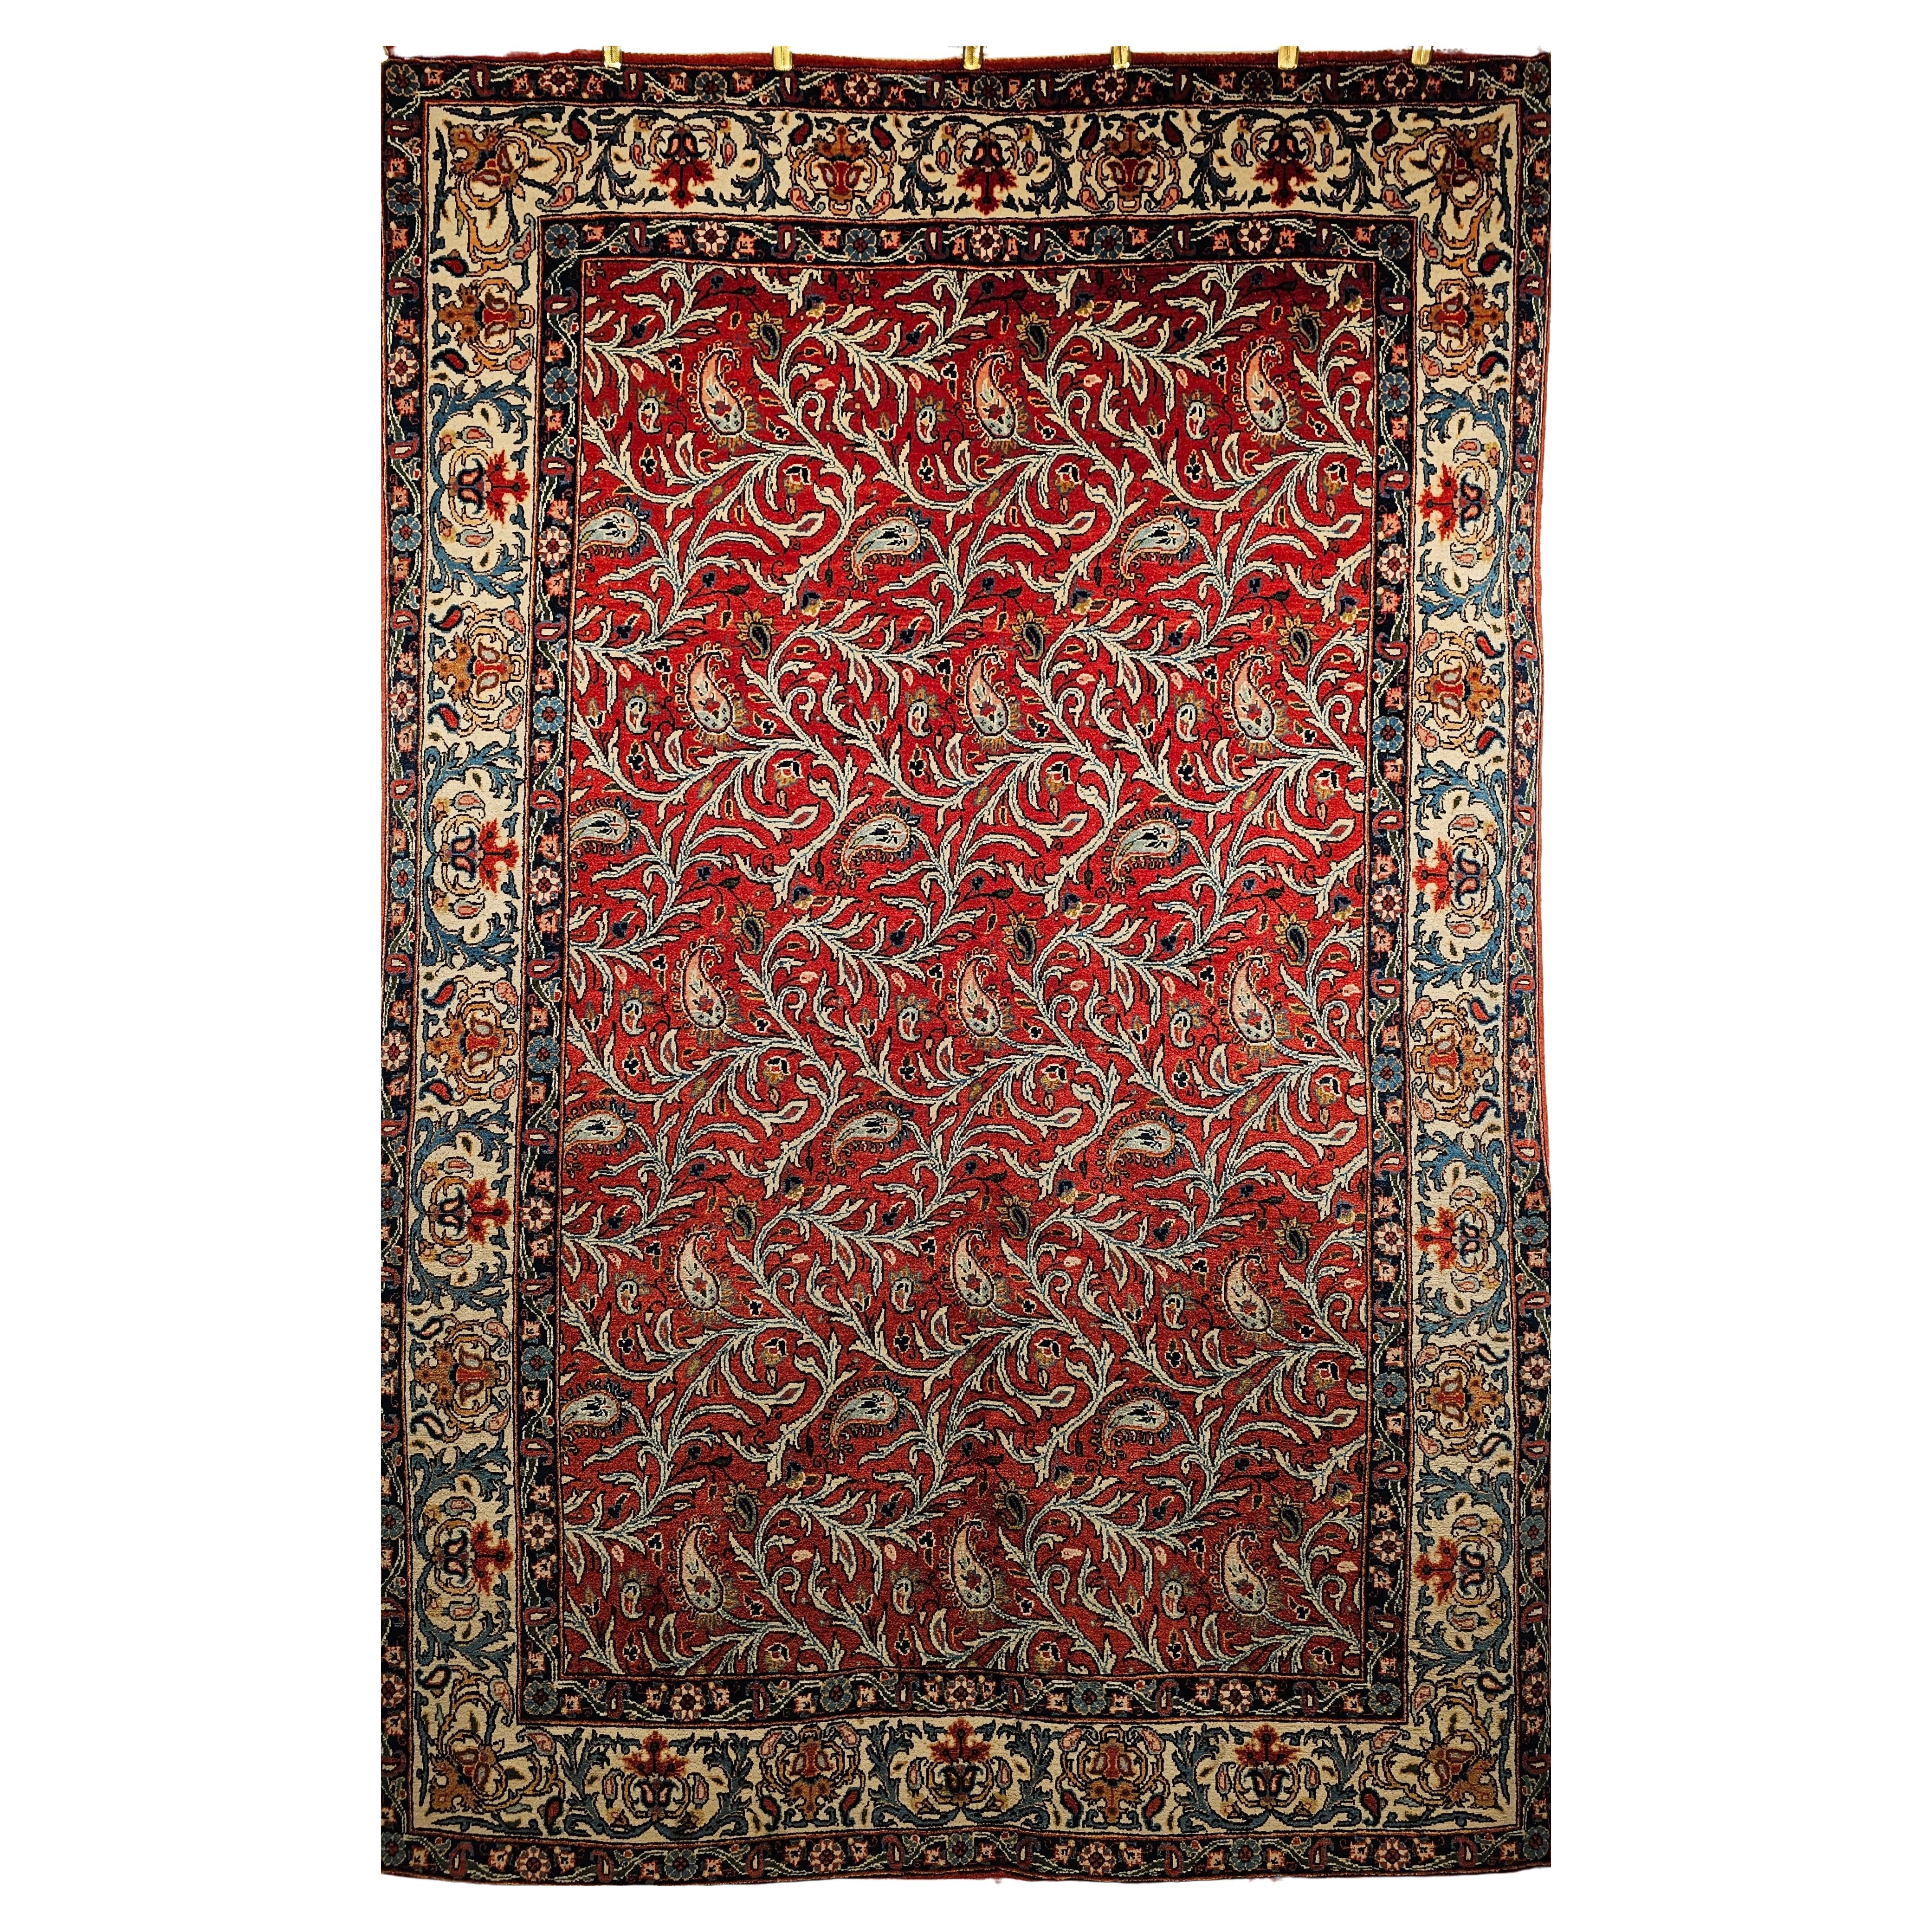 Vintage Persian Qum Rug in Allover Paisleys Pattern in Brick Red, Ivory, Blue